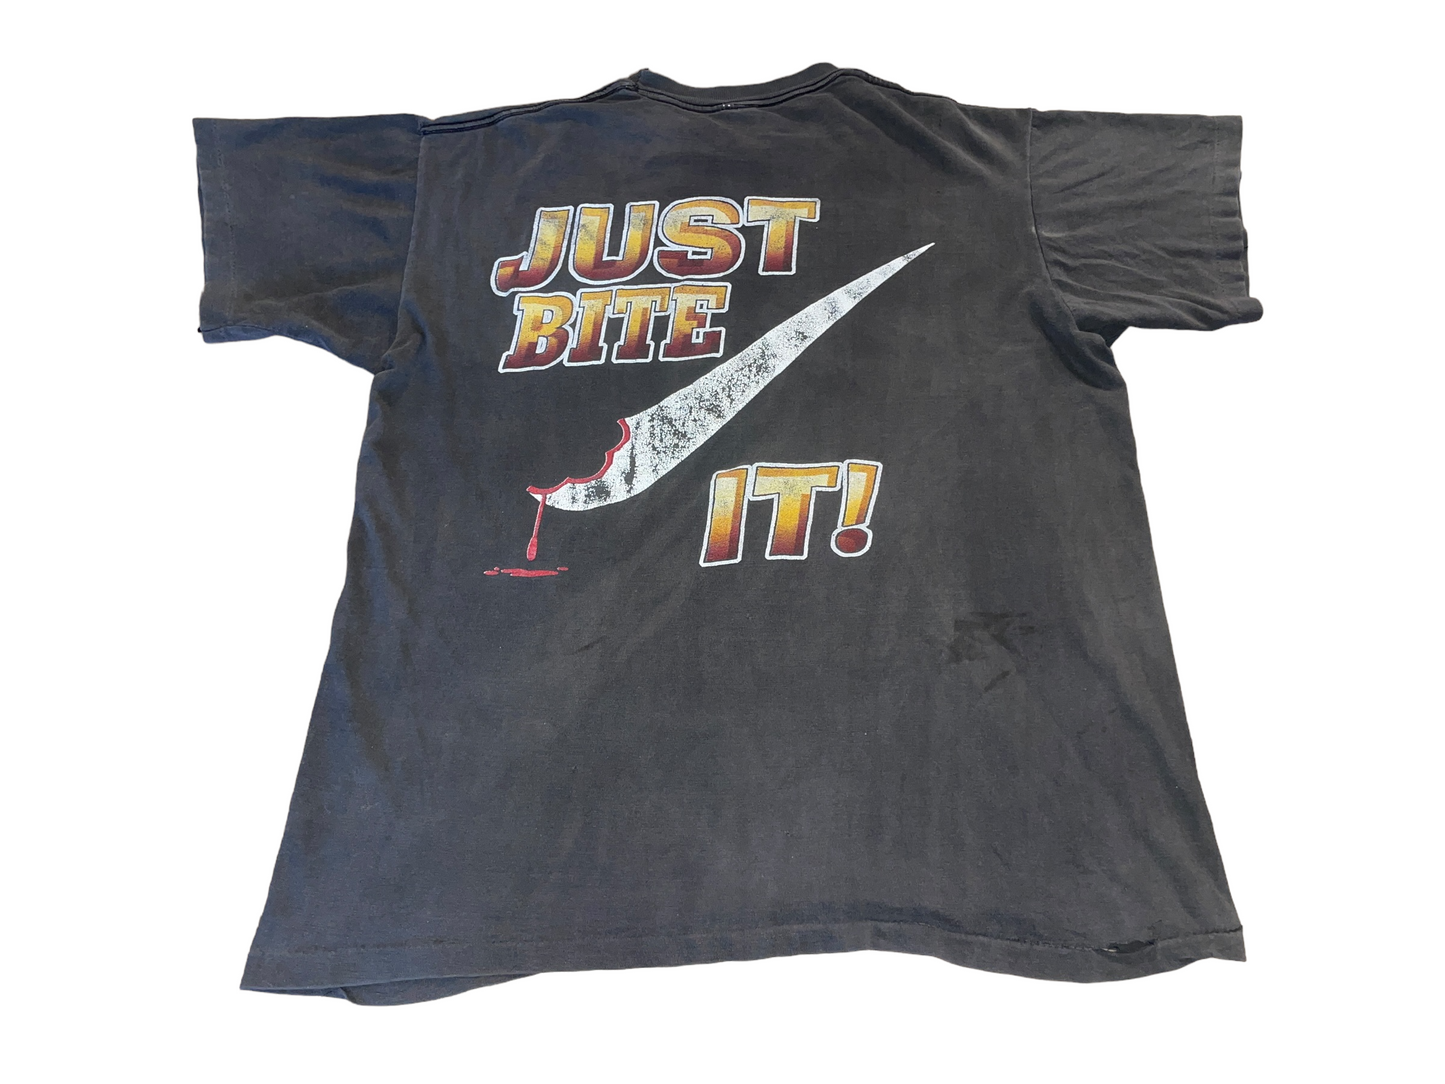 Vintage 90's Mike Tyson T-Shirt